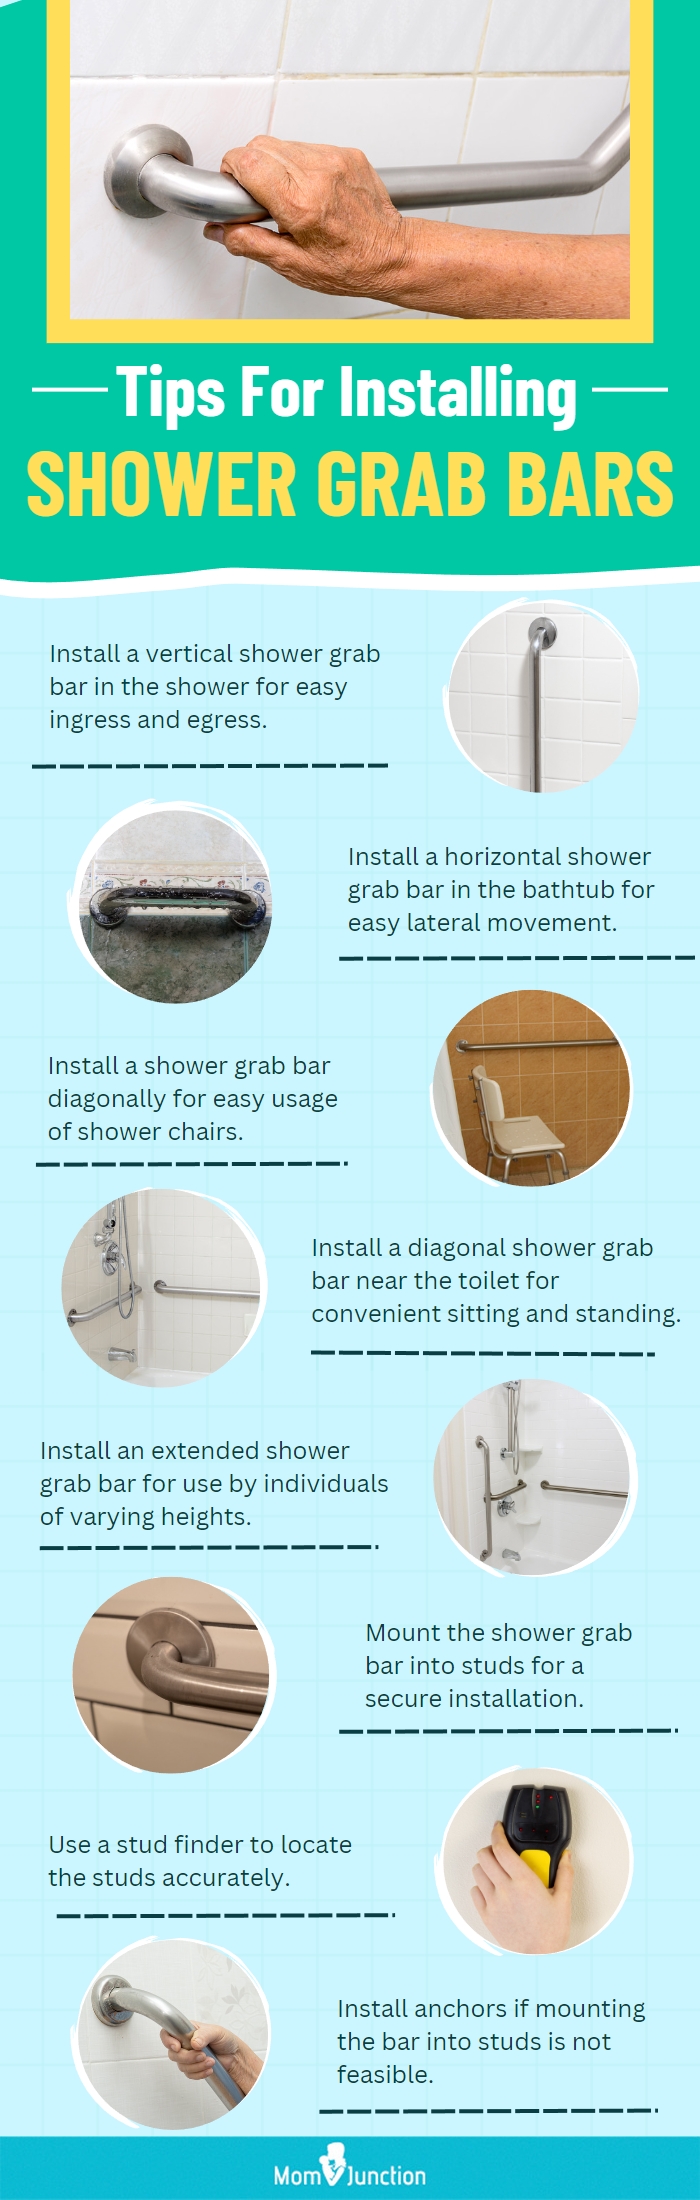 Tips For Installing Shower Grab Bars (infographic)